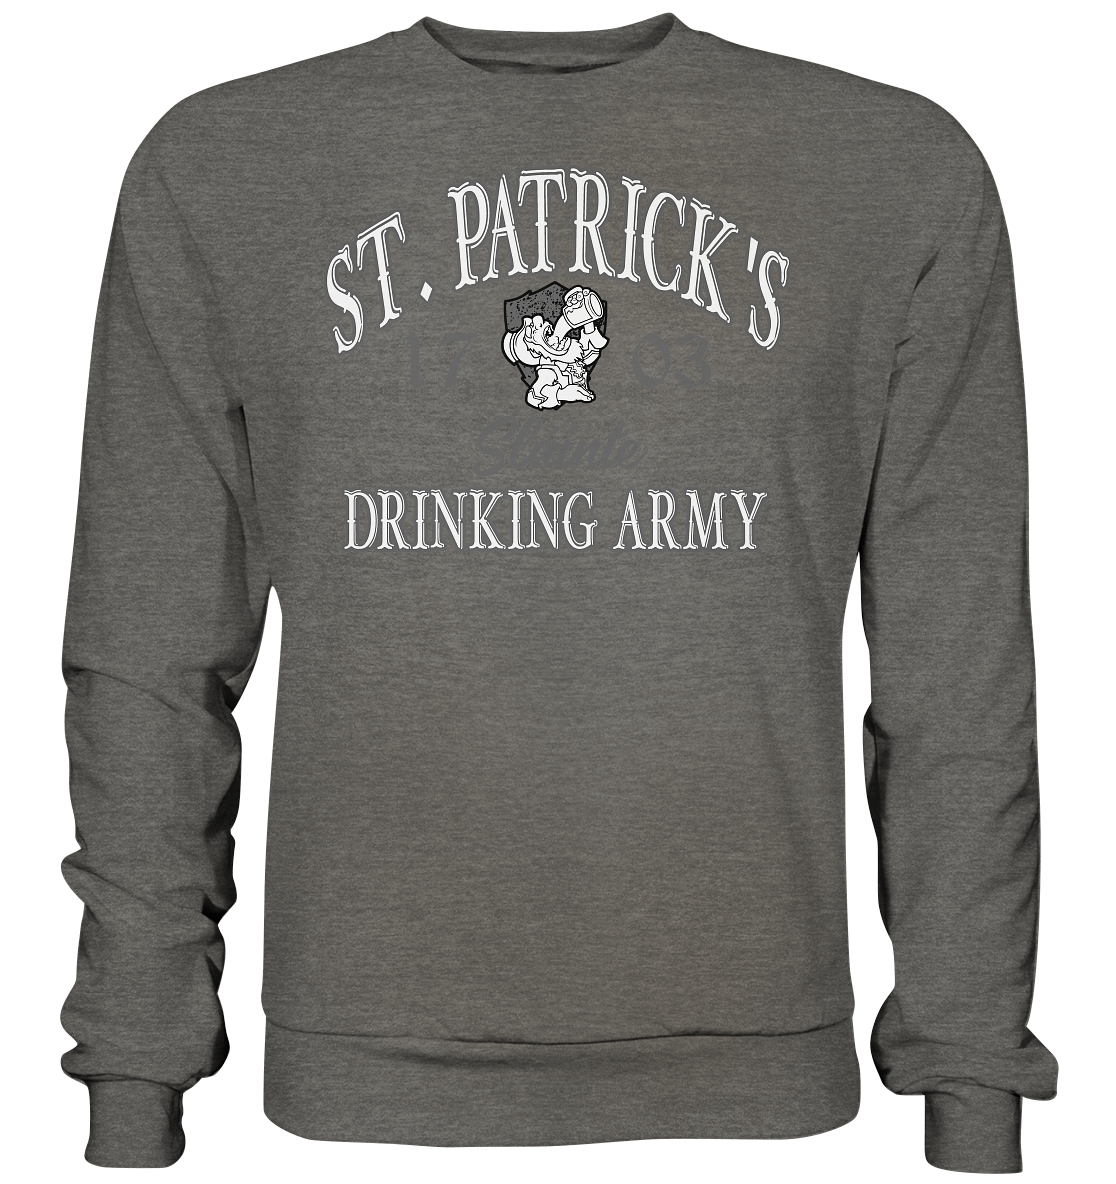 St. Patrick's Drinking Army "Sláinte" - Basic Sweatshirt